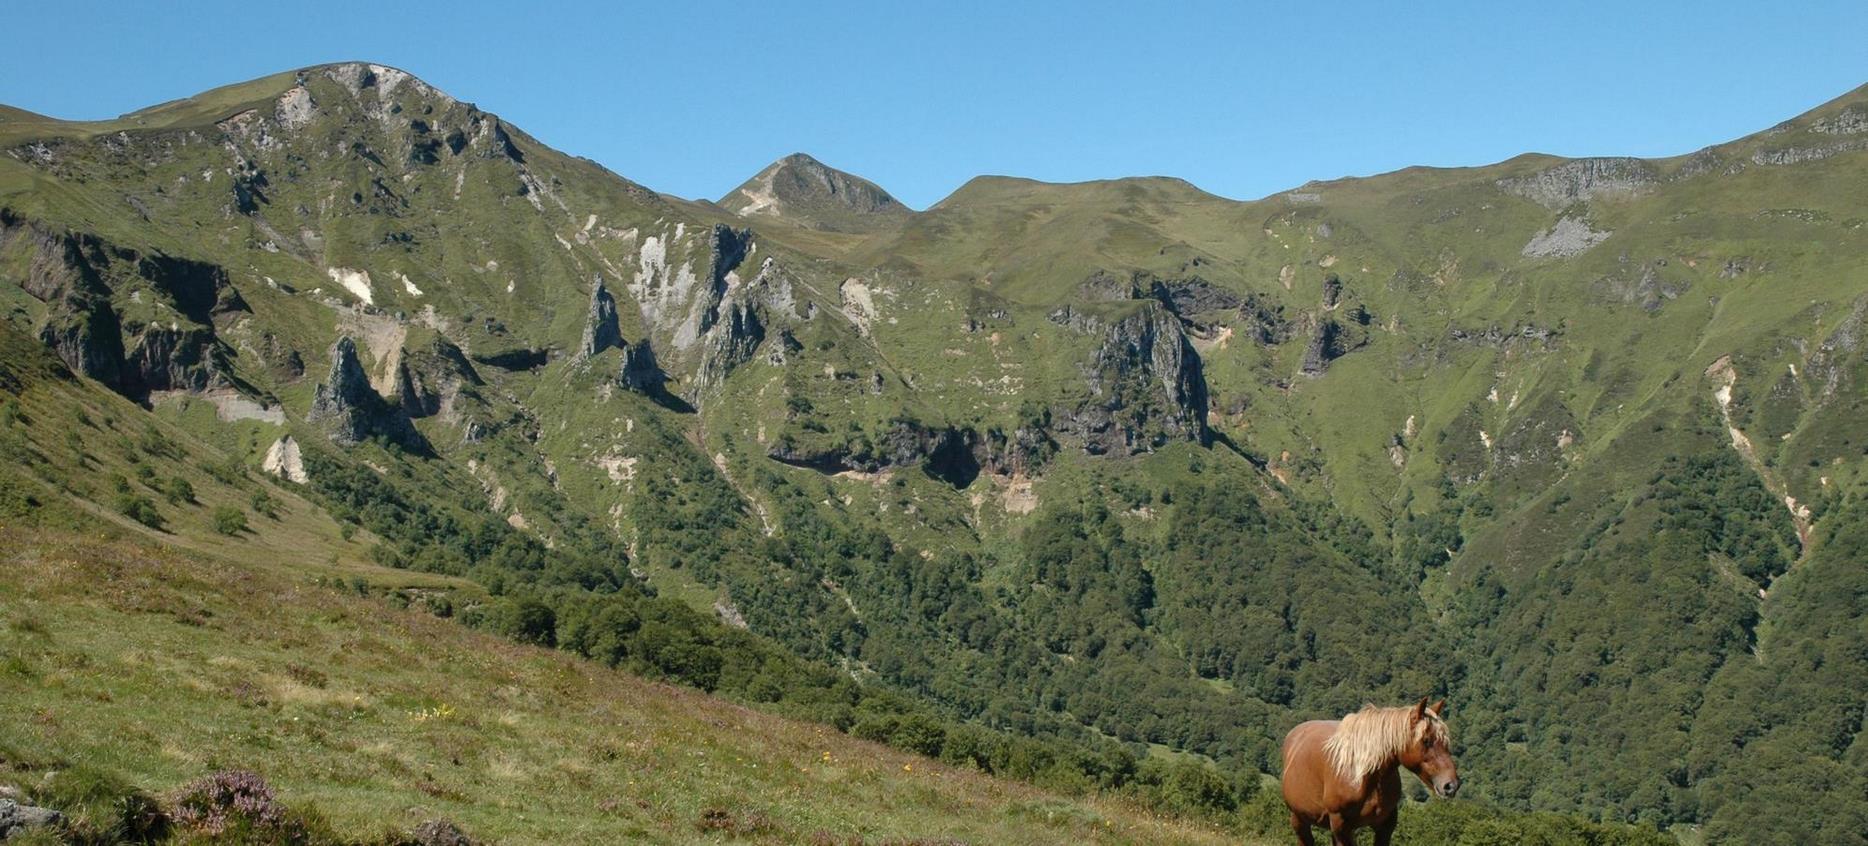 Super Besse - Horse in the Chaudefour Valley natural park